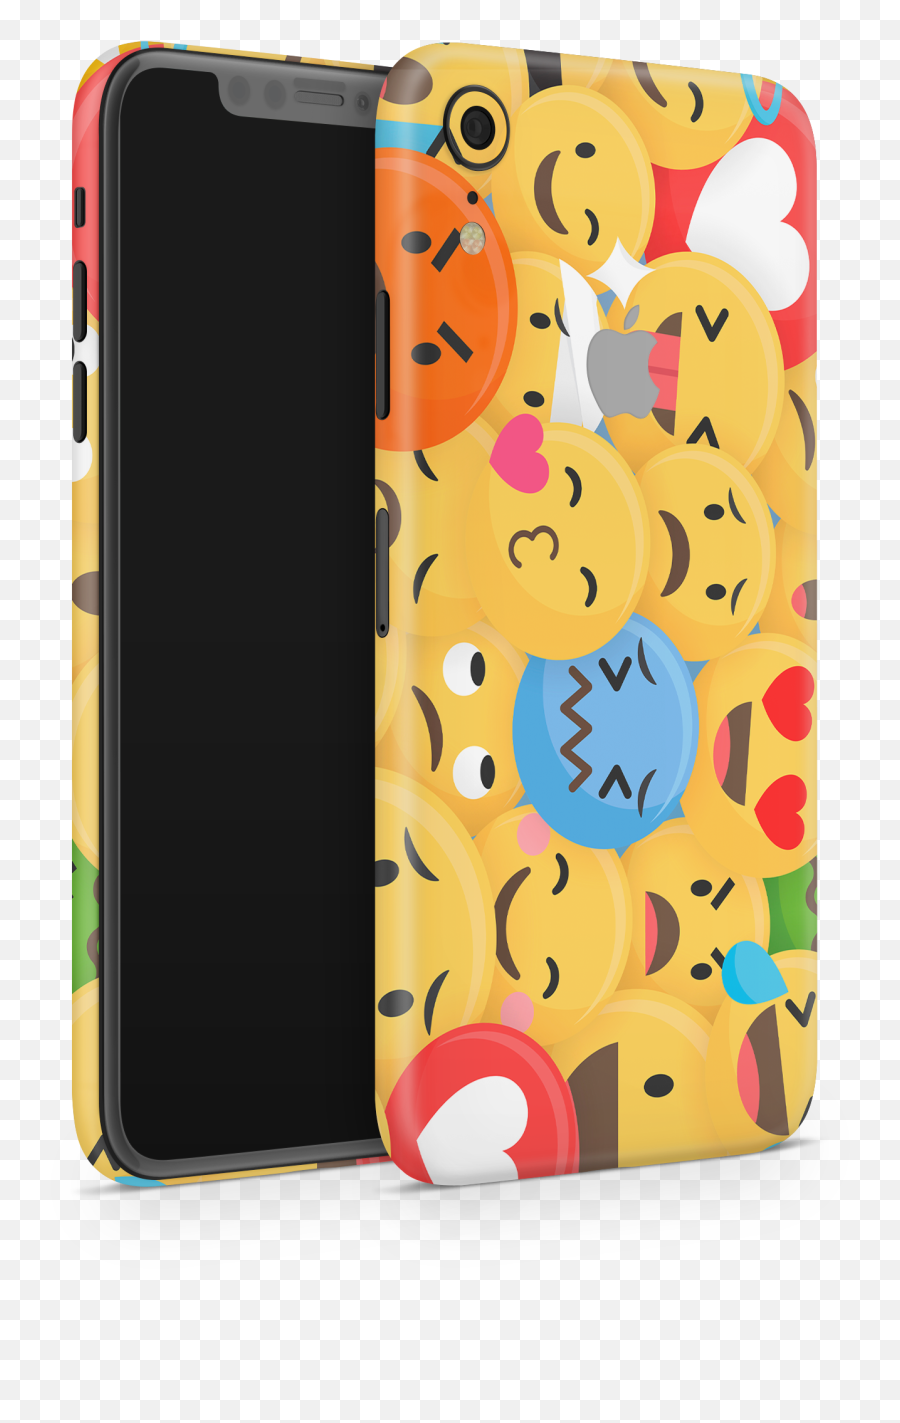 Iphone Xr Skin - Mobile Phone Case Emoji,Iphone Case With Galxey Emojis